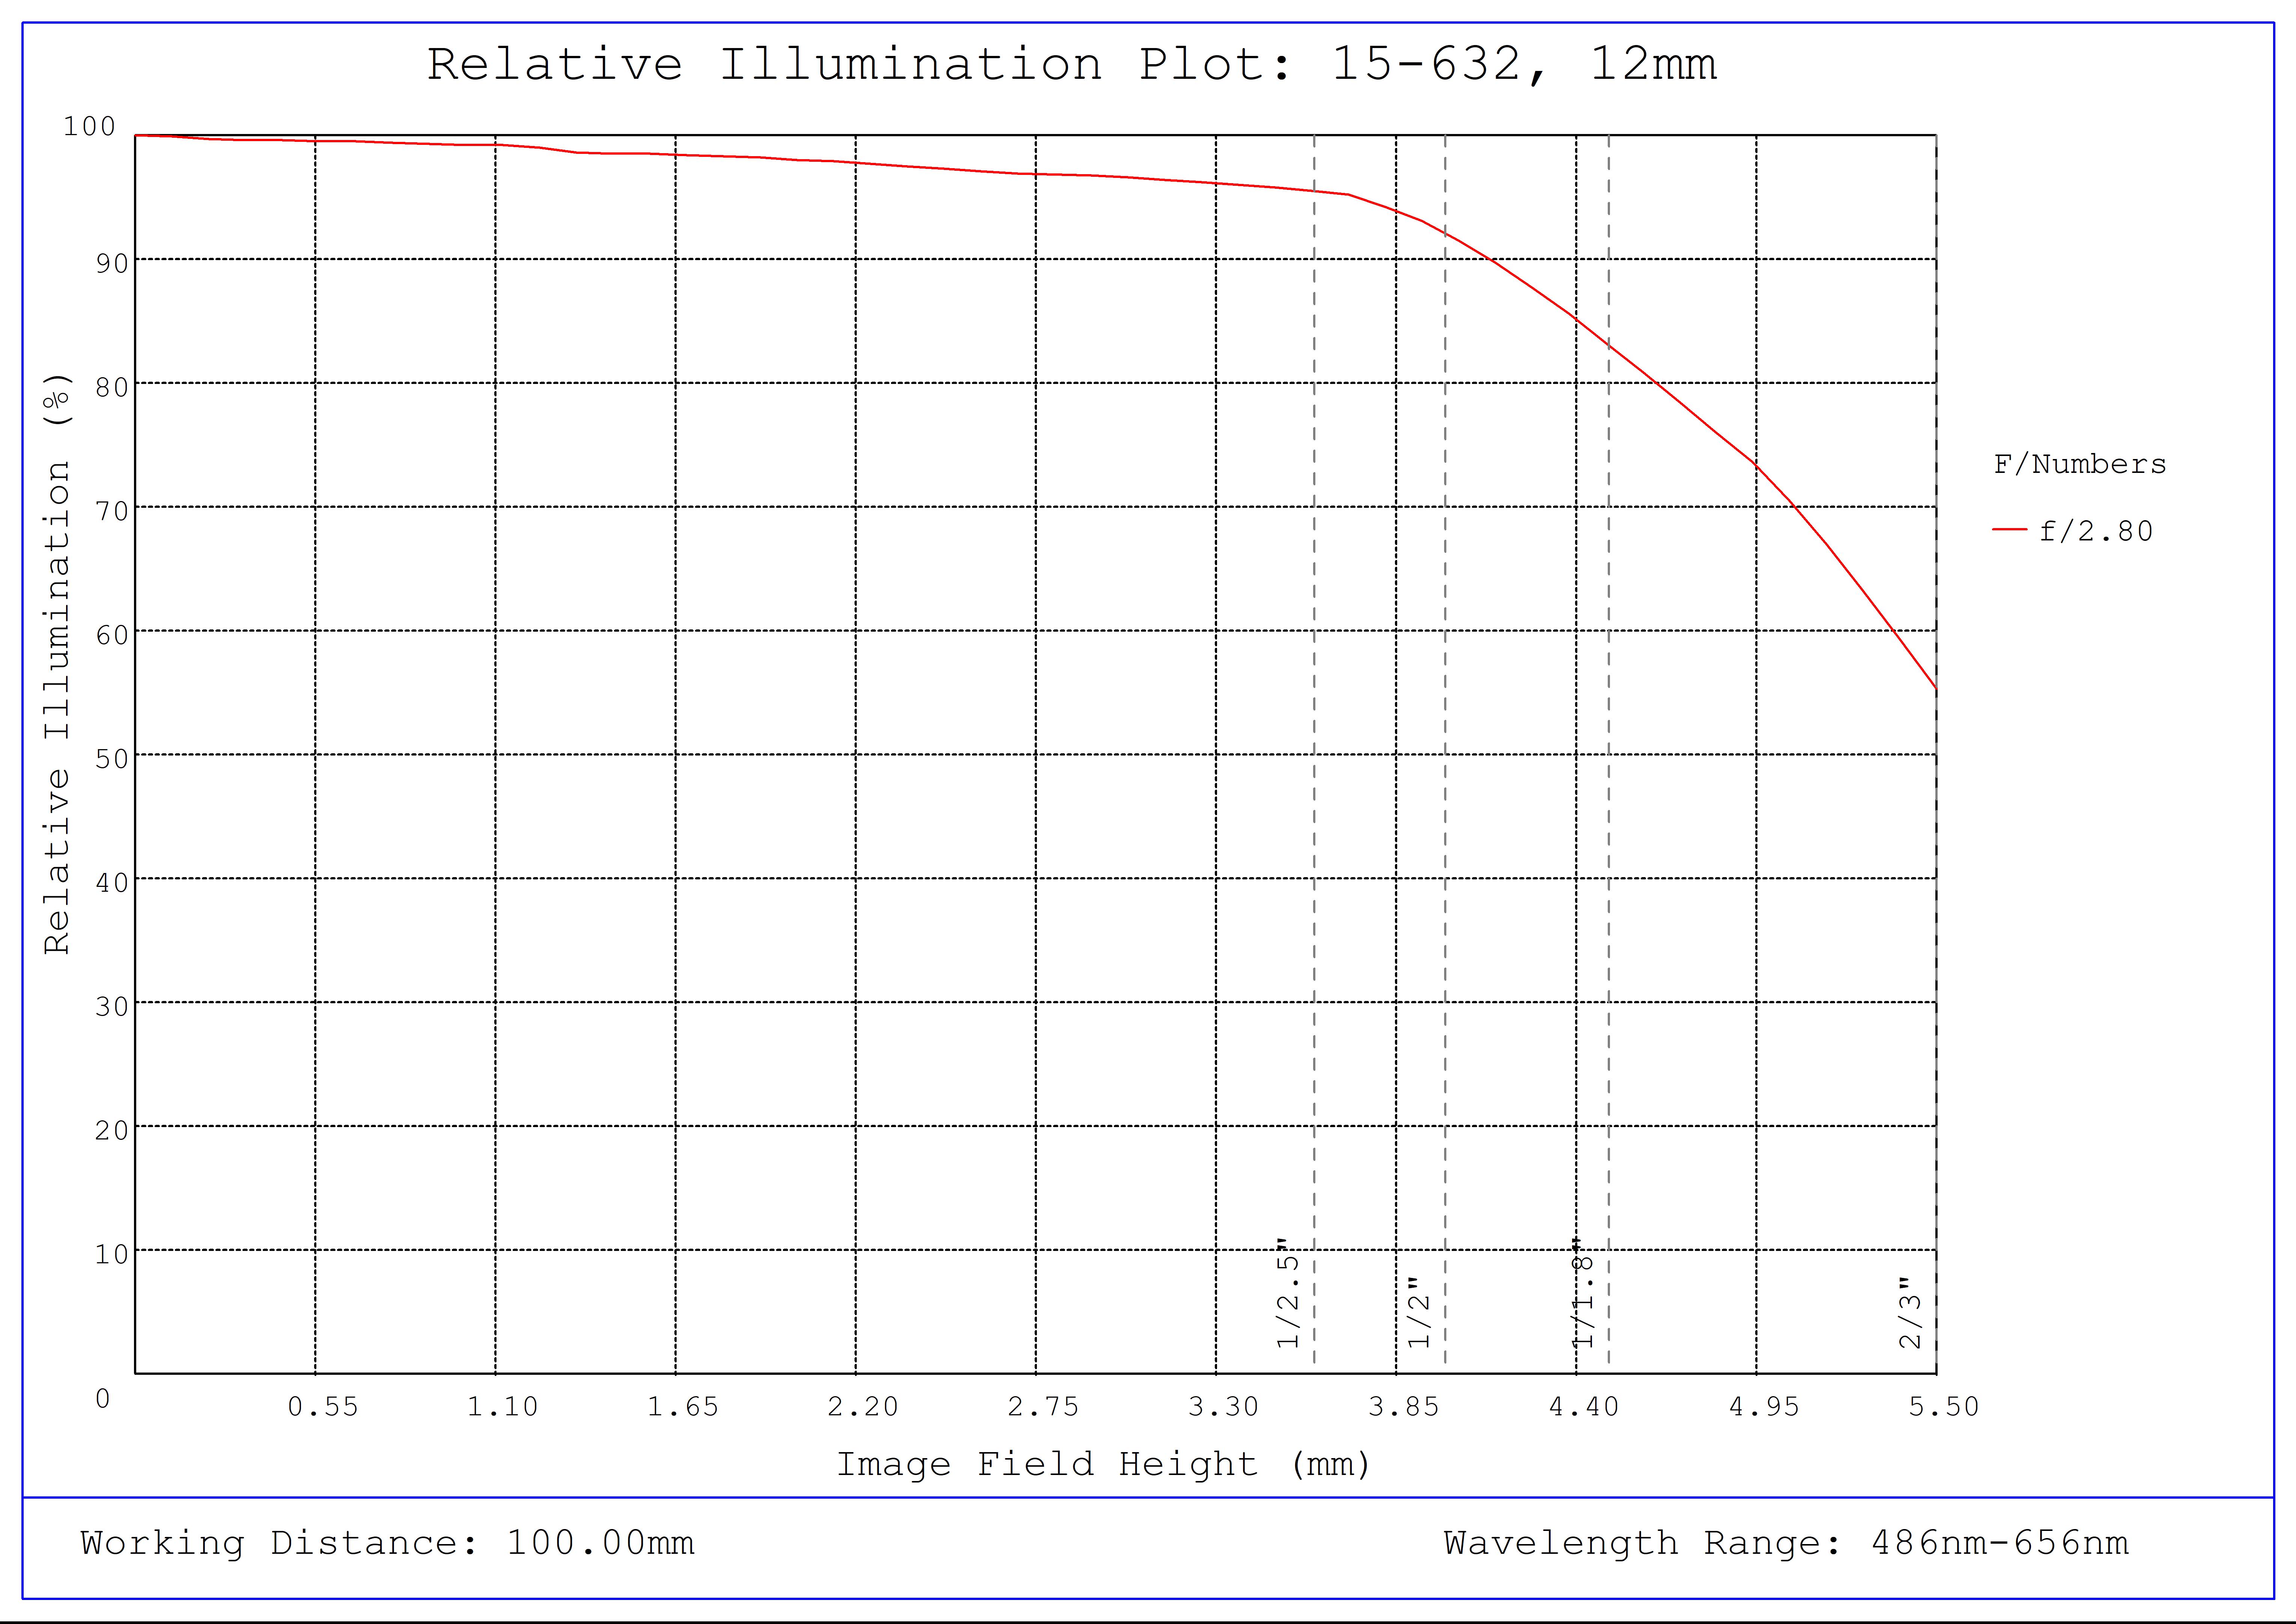 #15-632, 12mm, f/2.8 Cw Series Fixed Focal Length Lens, Relative Illumination Plot